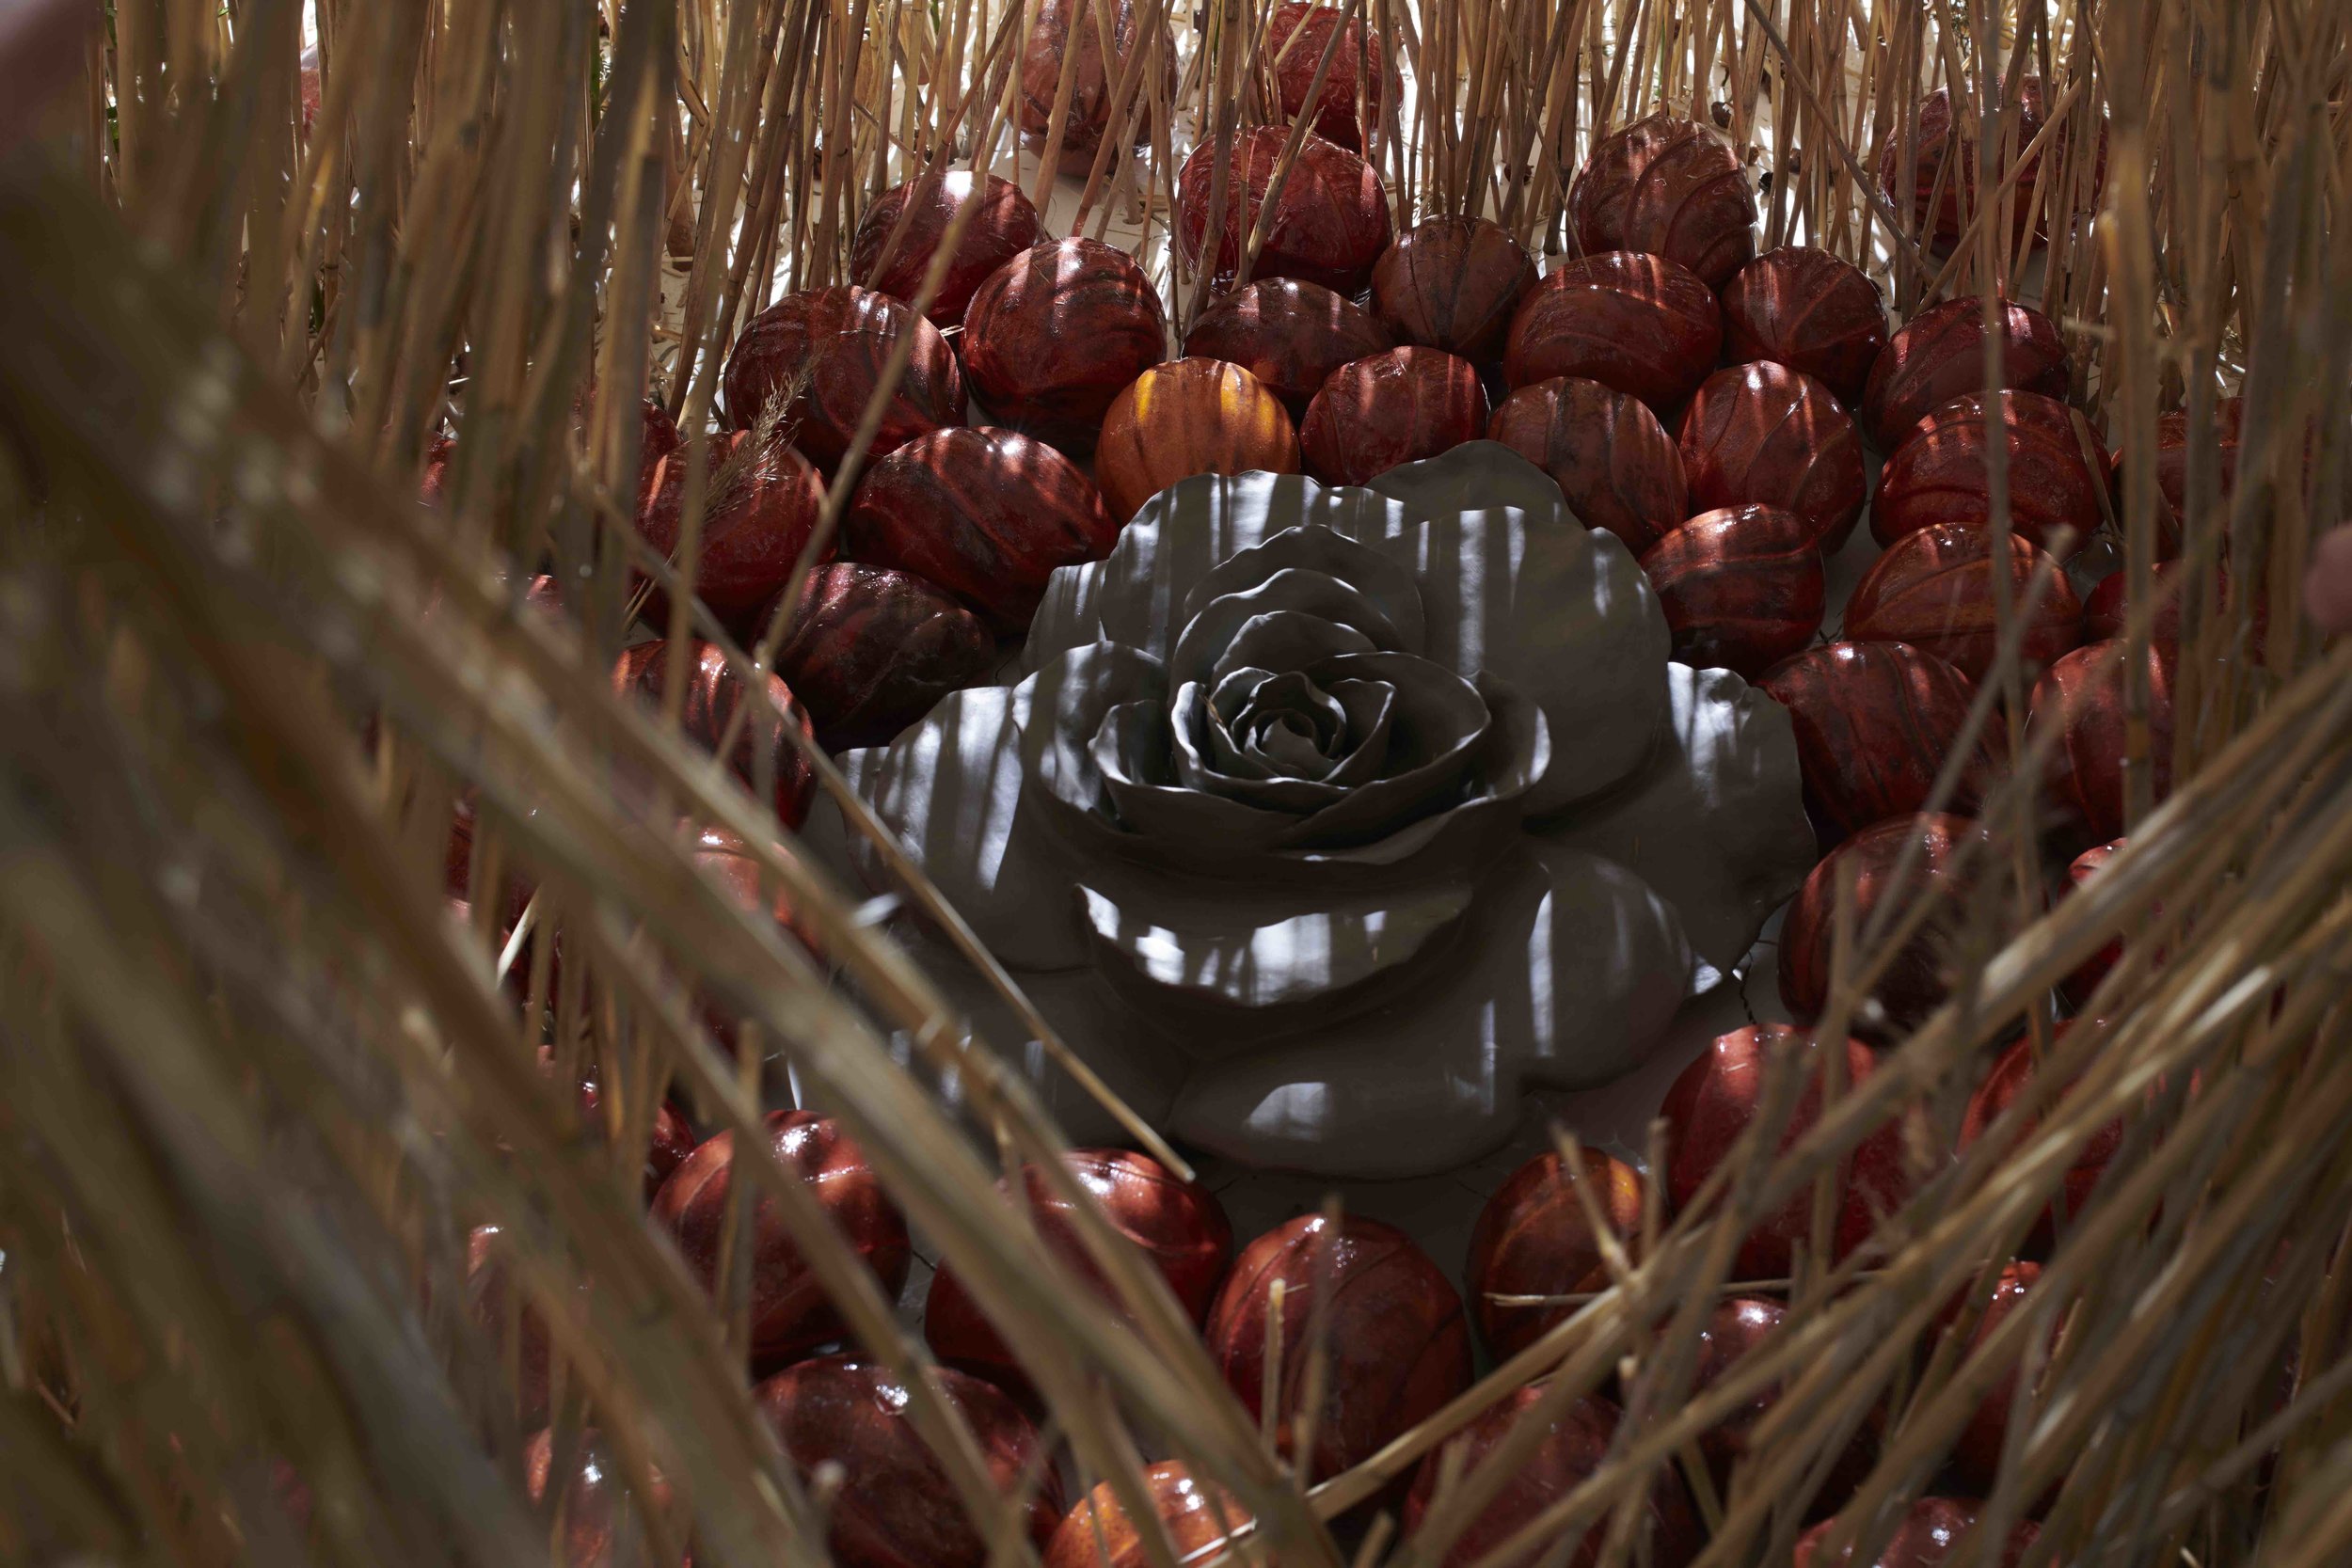 Lilith Carpet - rose detail, image by Sylvain Deleu.jpg